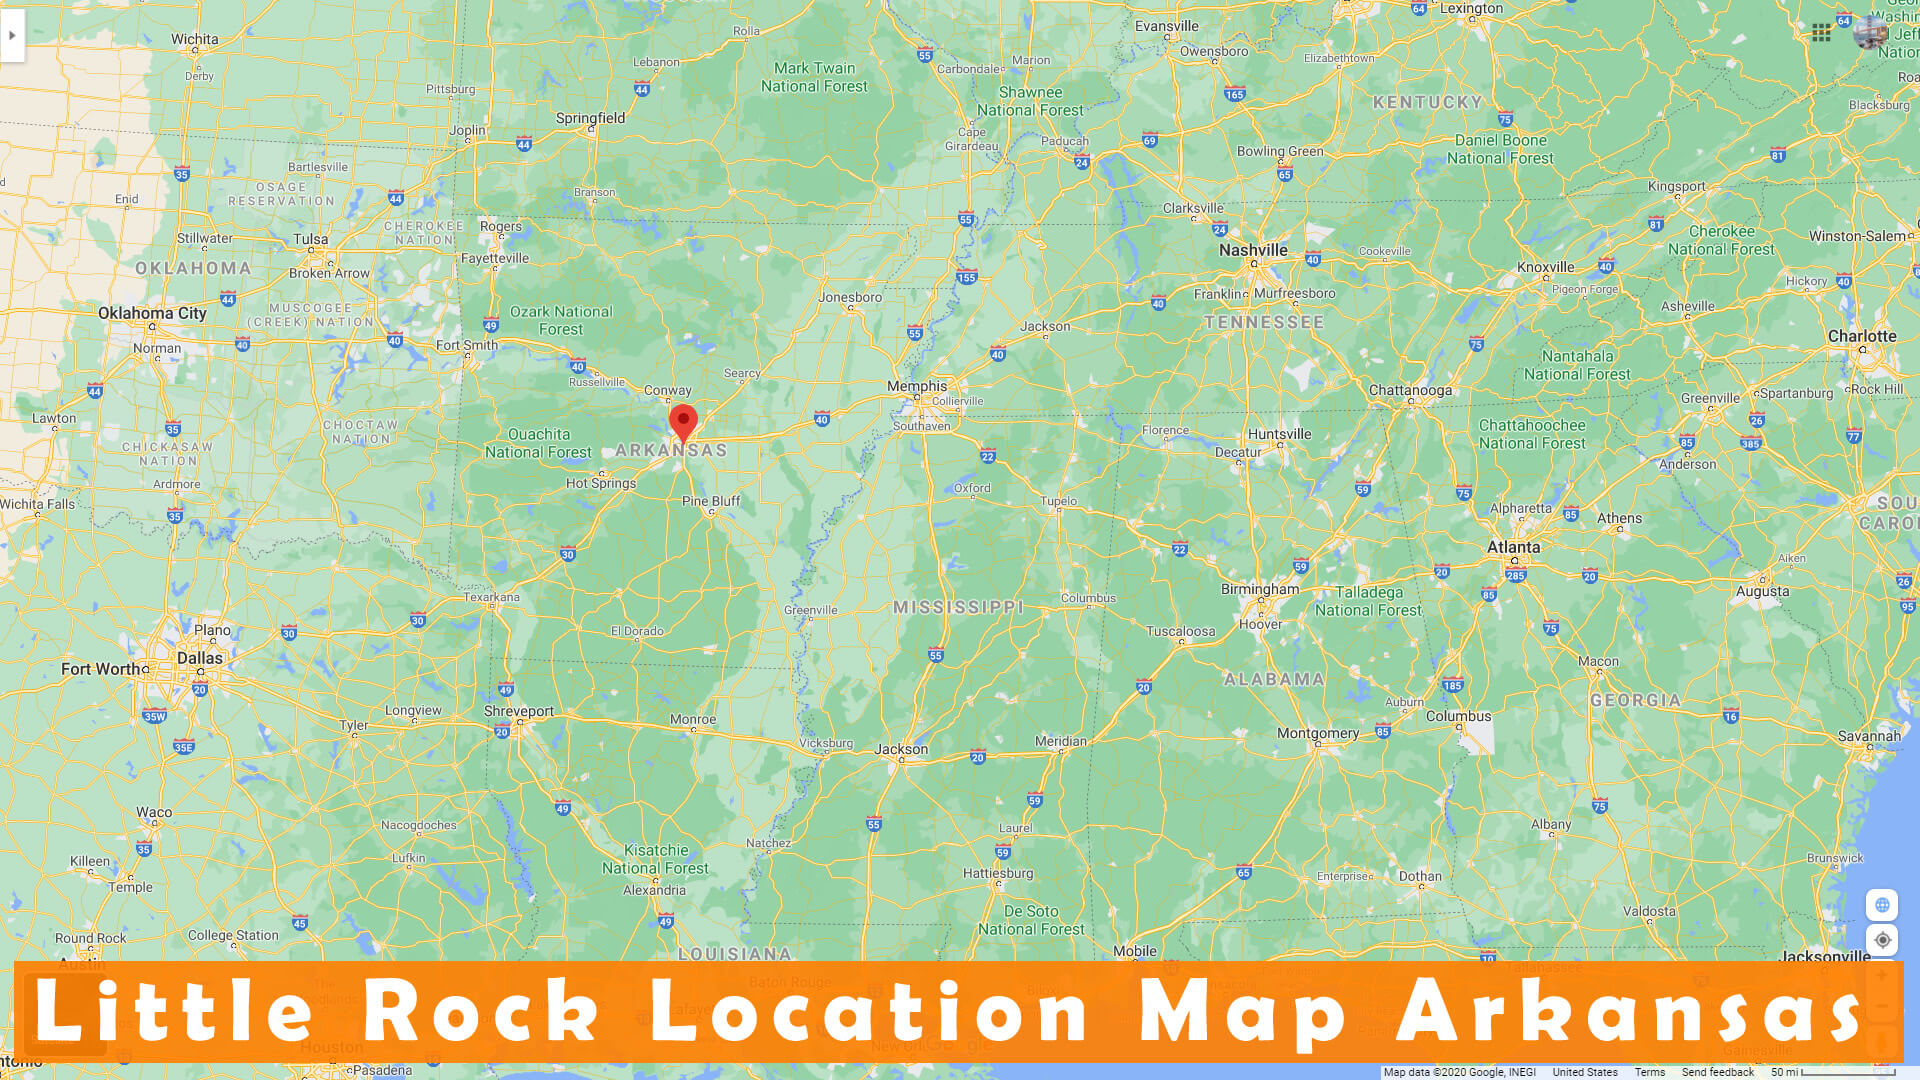 Little Rock Location Map Arkansas